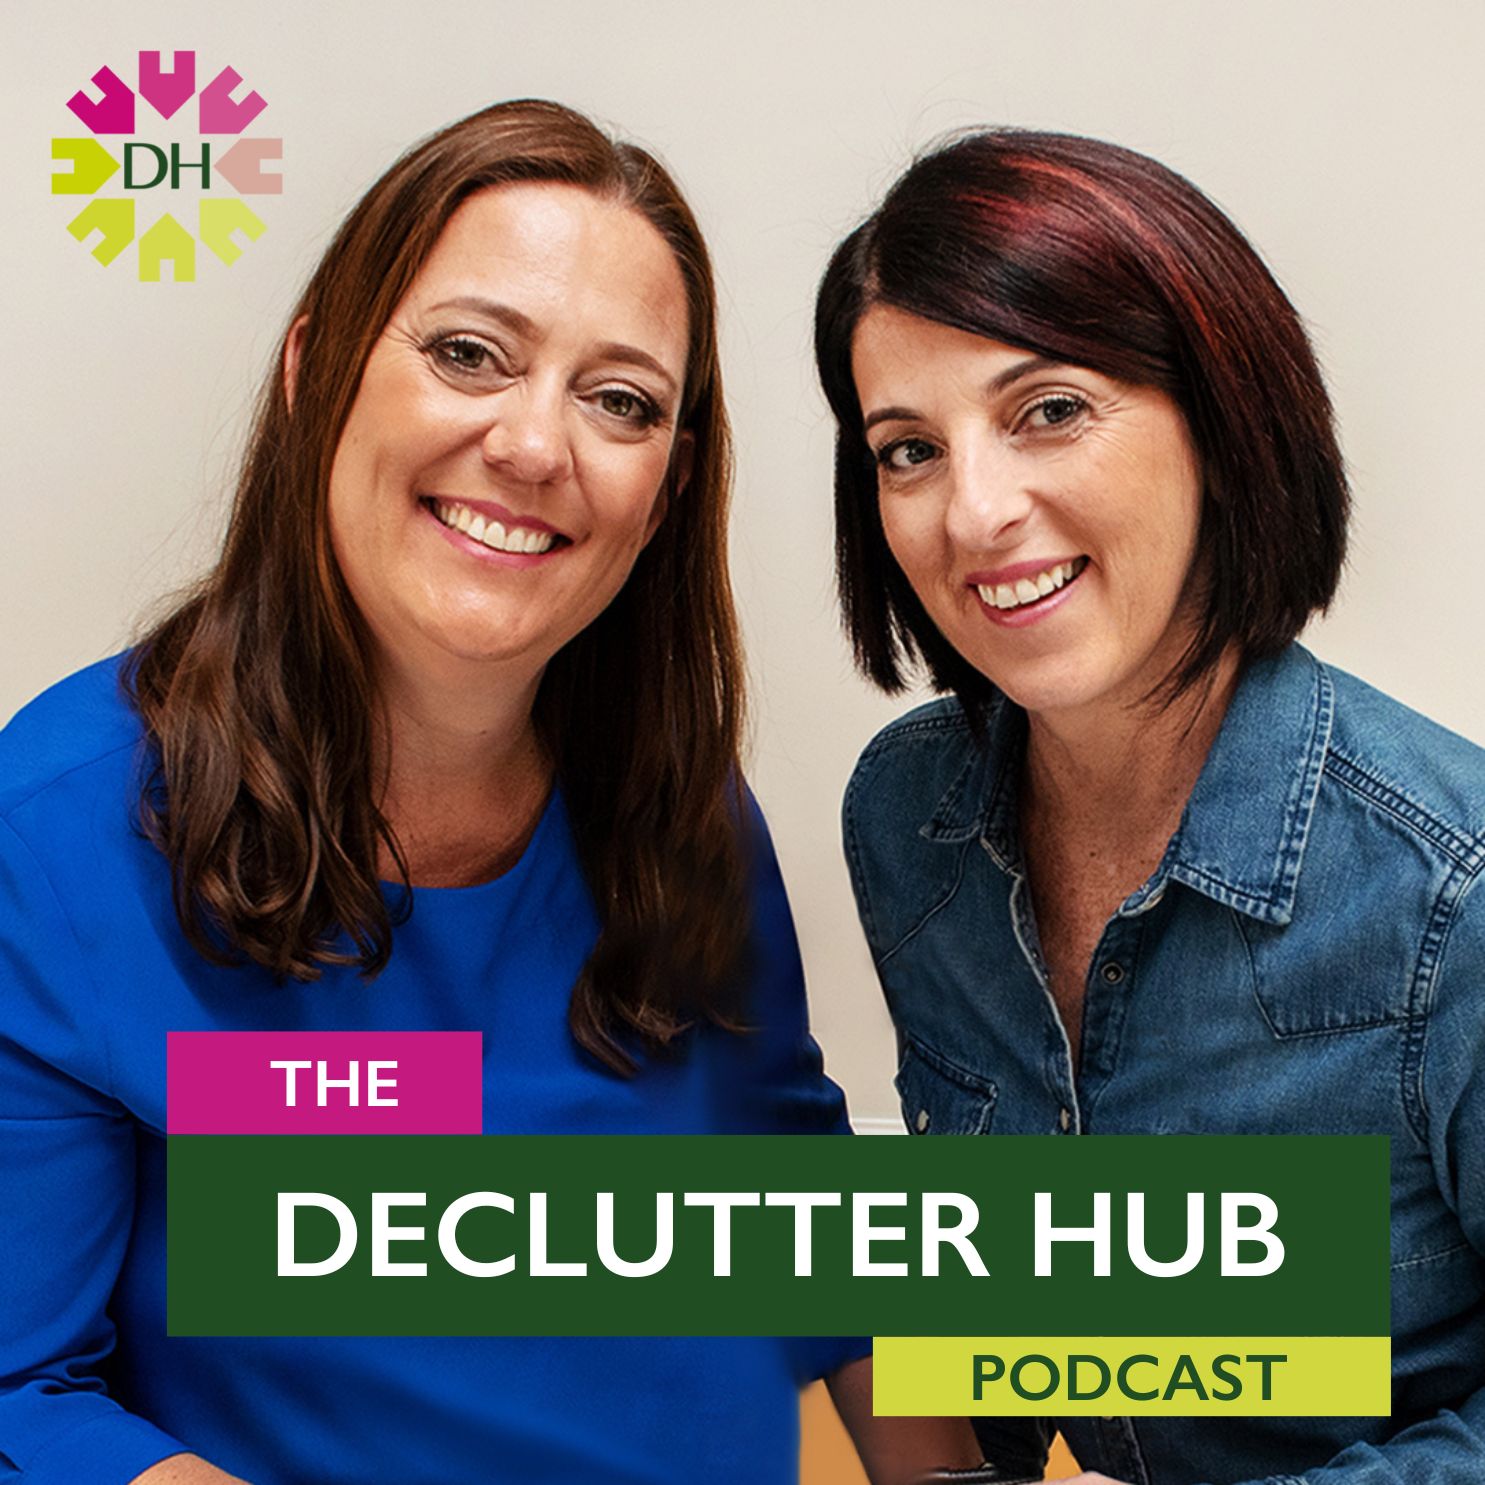 Artwork for podcast The Declutter Hub Podcast